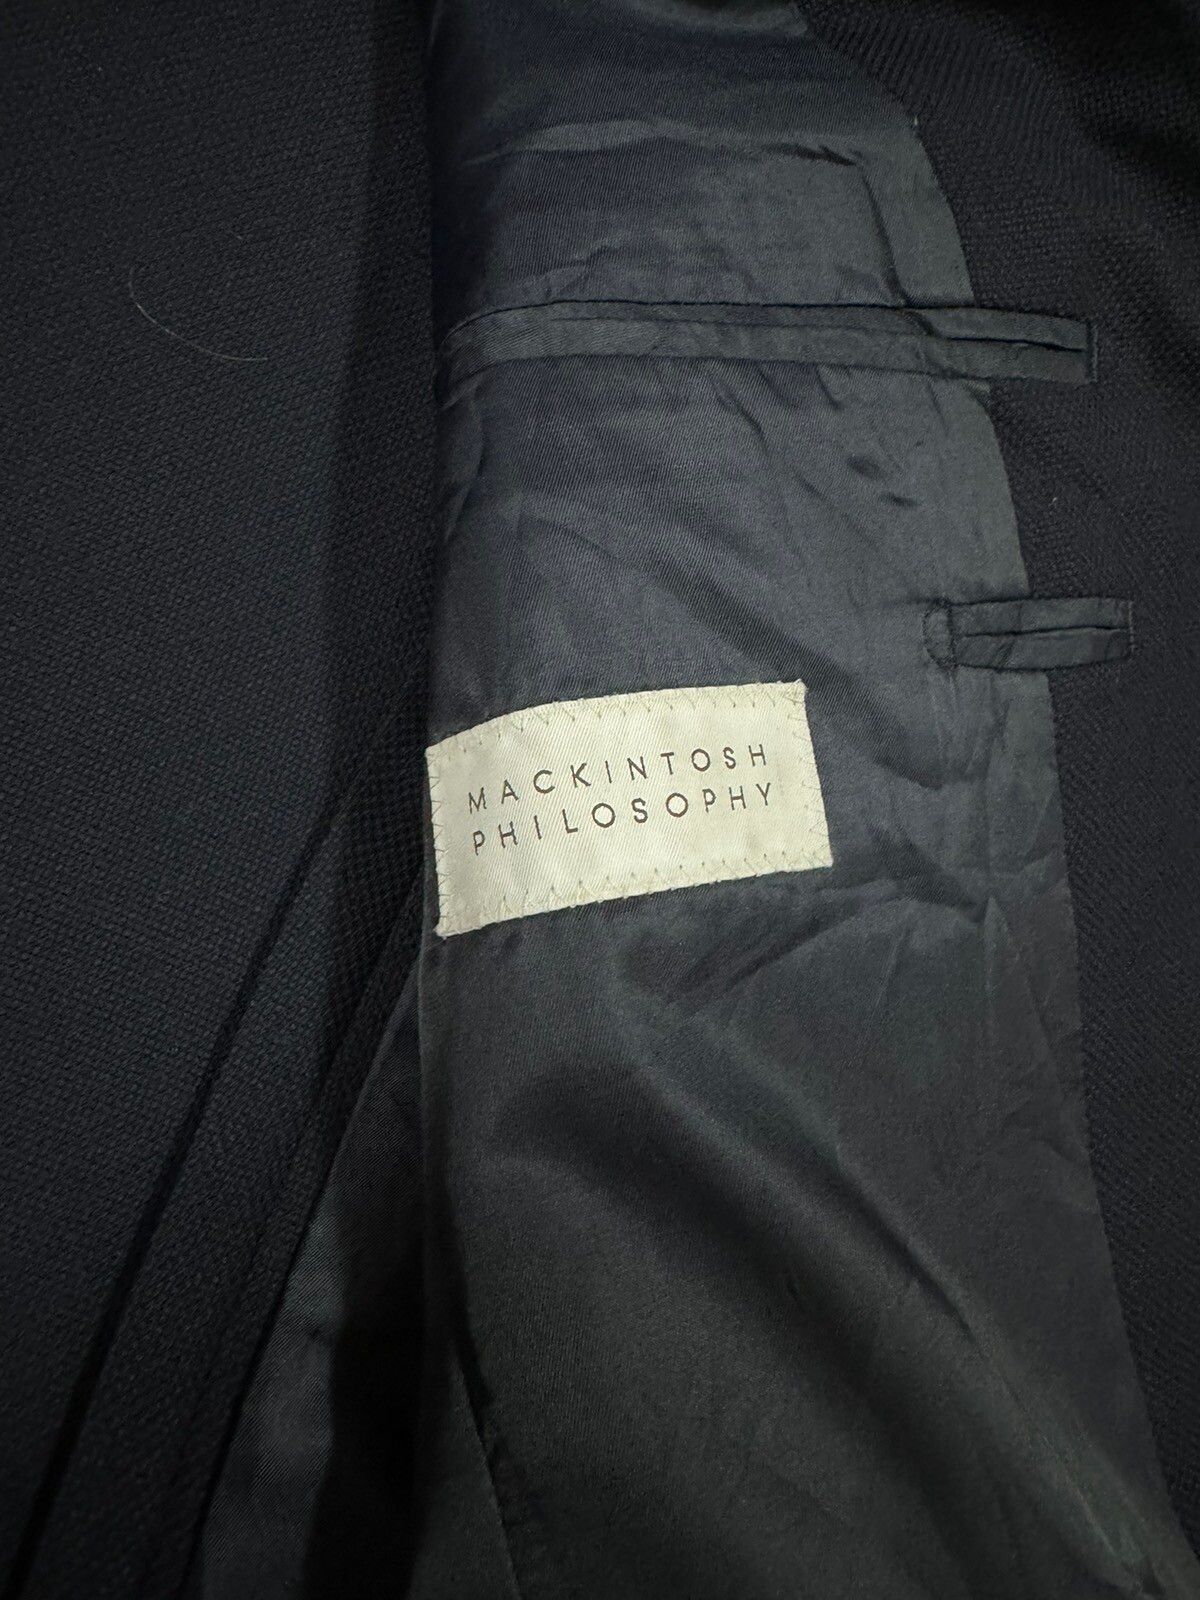 Mackintosh Philosophy Blazer Jacket Suit - 11